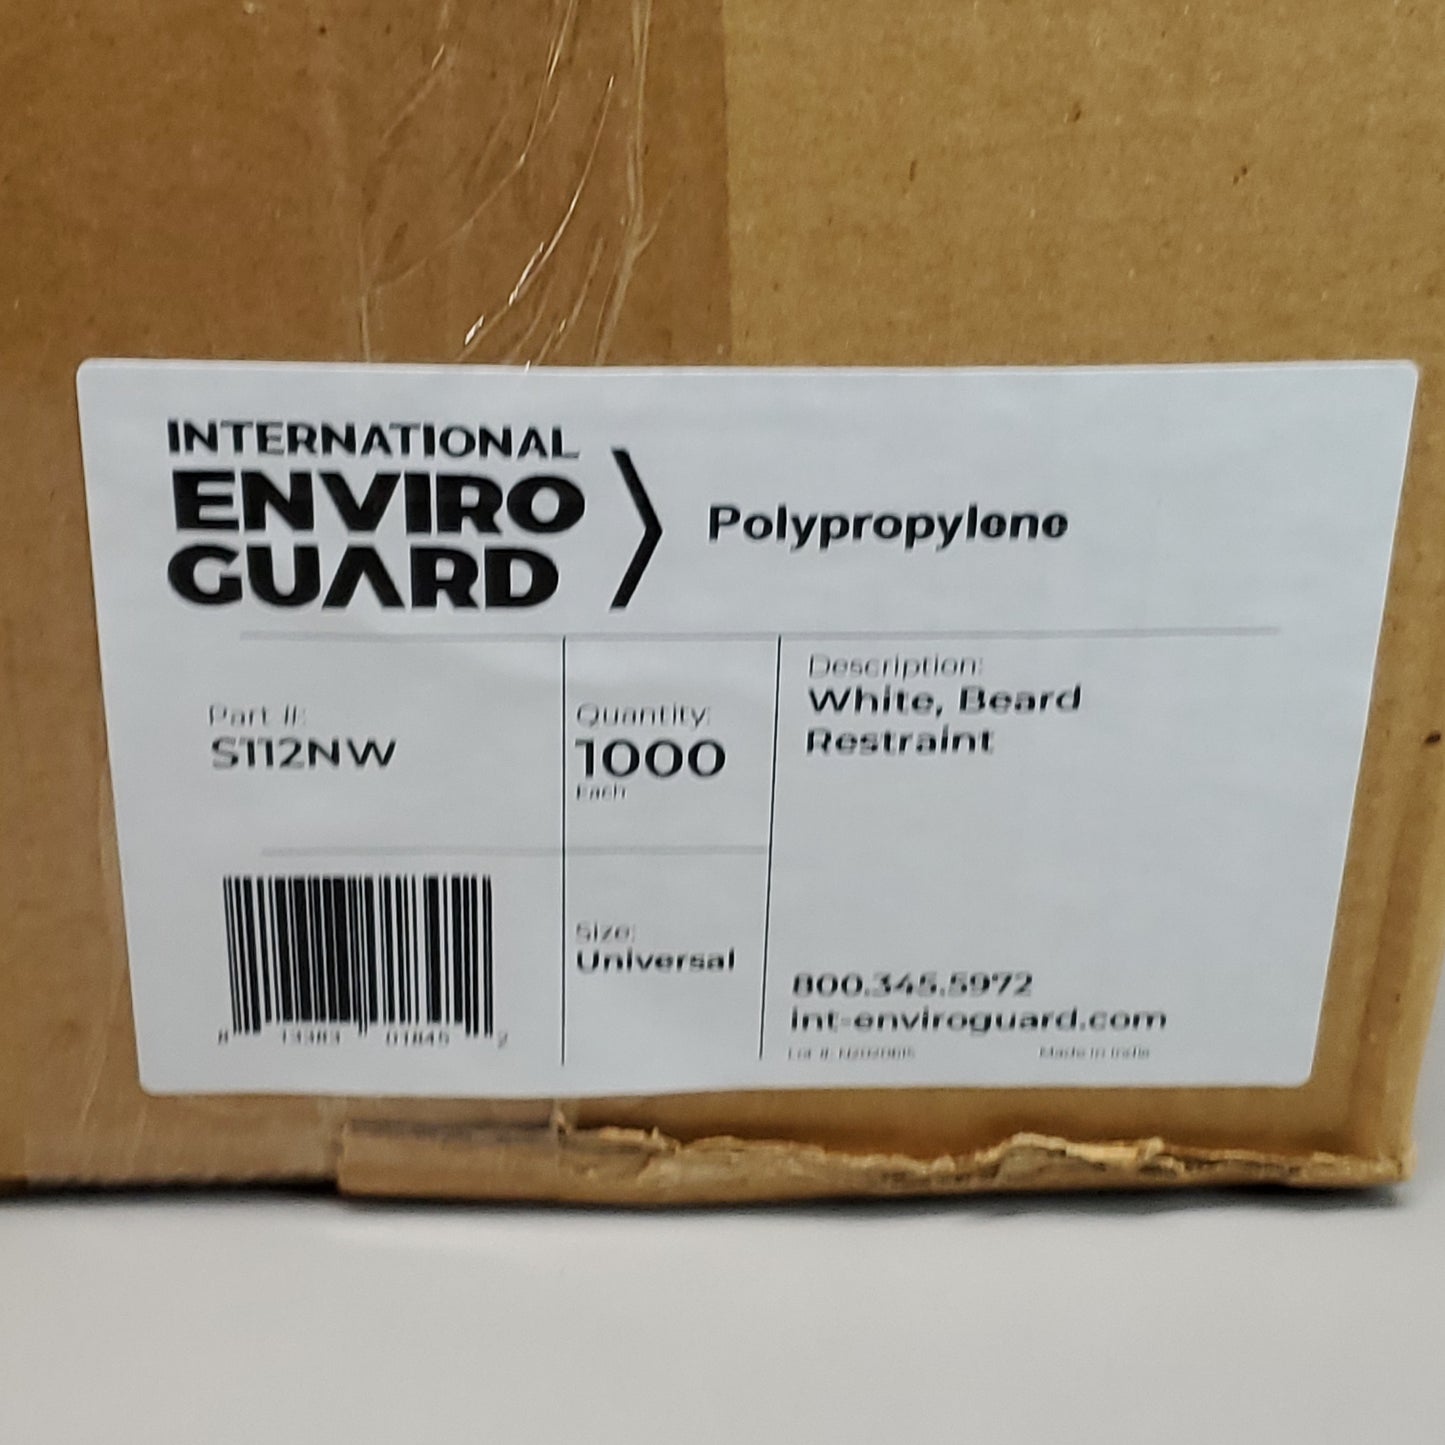 INTERNATIONAL ENVIRO GUARD Polypropylene White Beard Restraint Case of 1,000 S112NW (New Other)